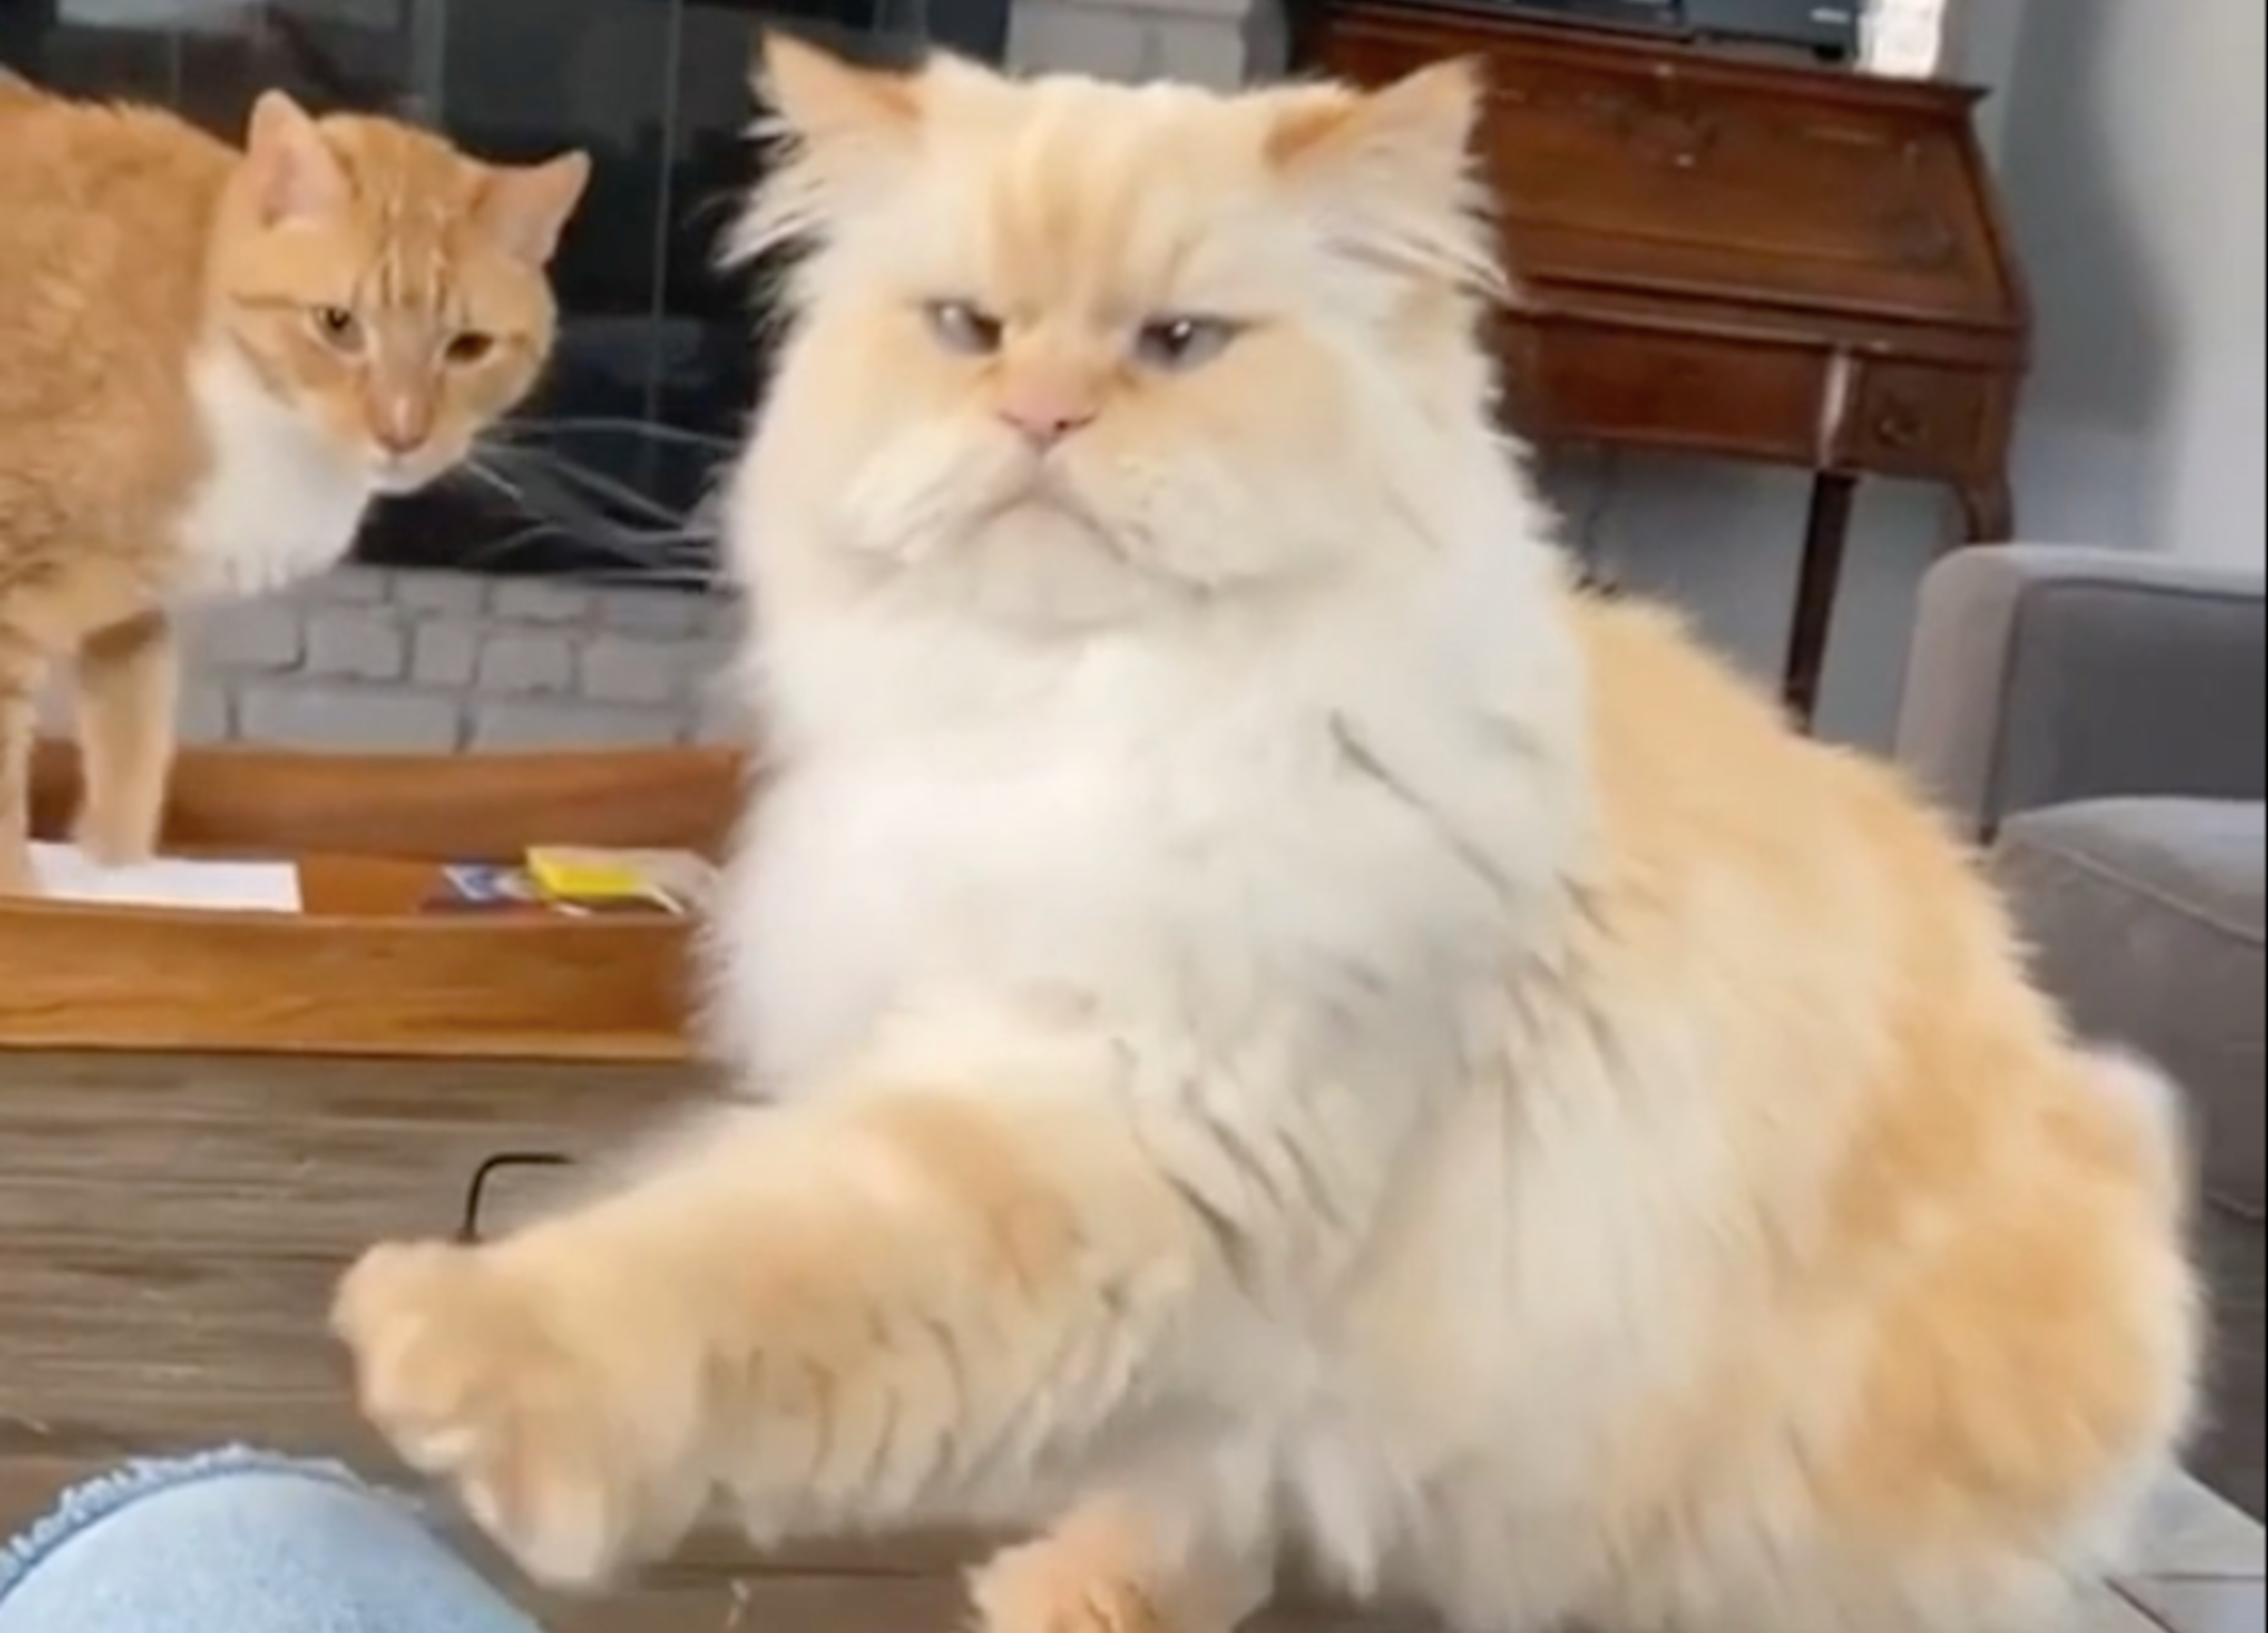 Looks good Looks Bad - Grumpy Cat vs Happy Cat